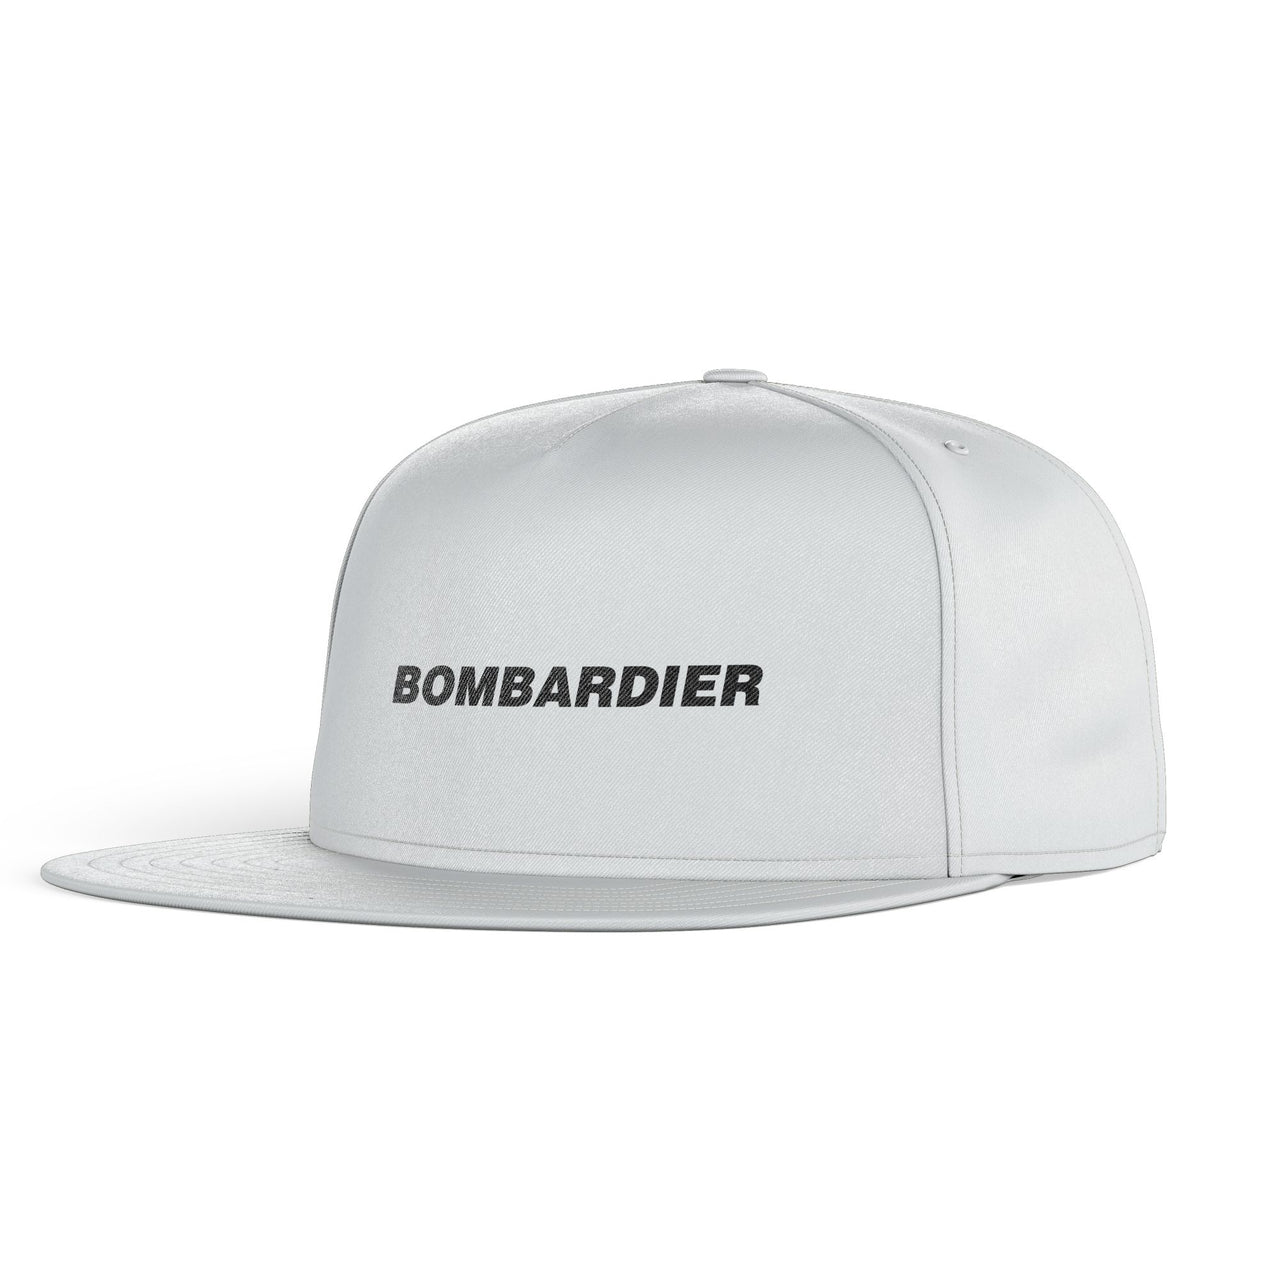 Bombardier & Text Designed Snapback Caps & Hats